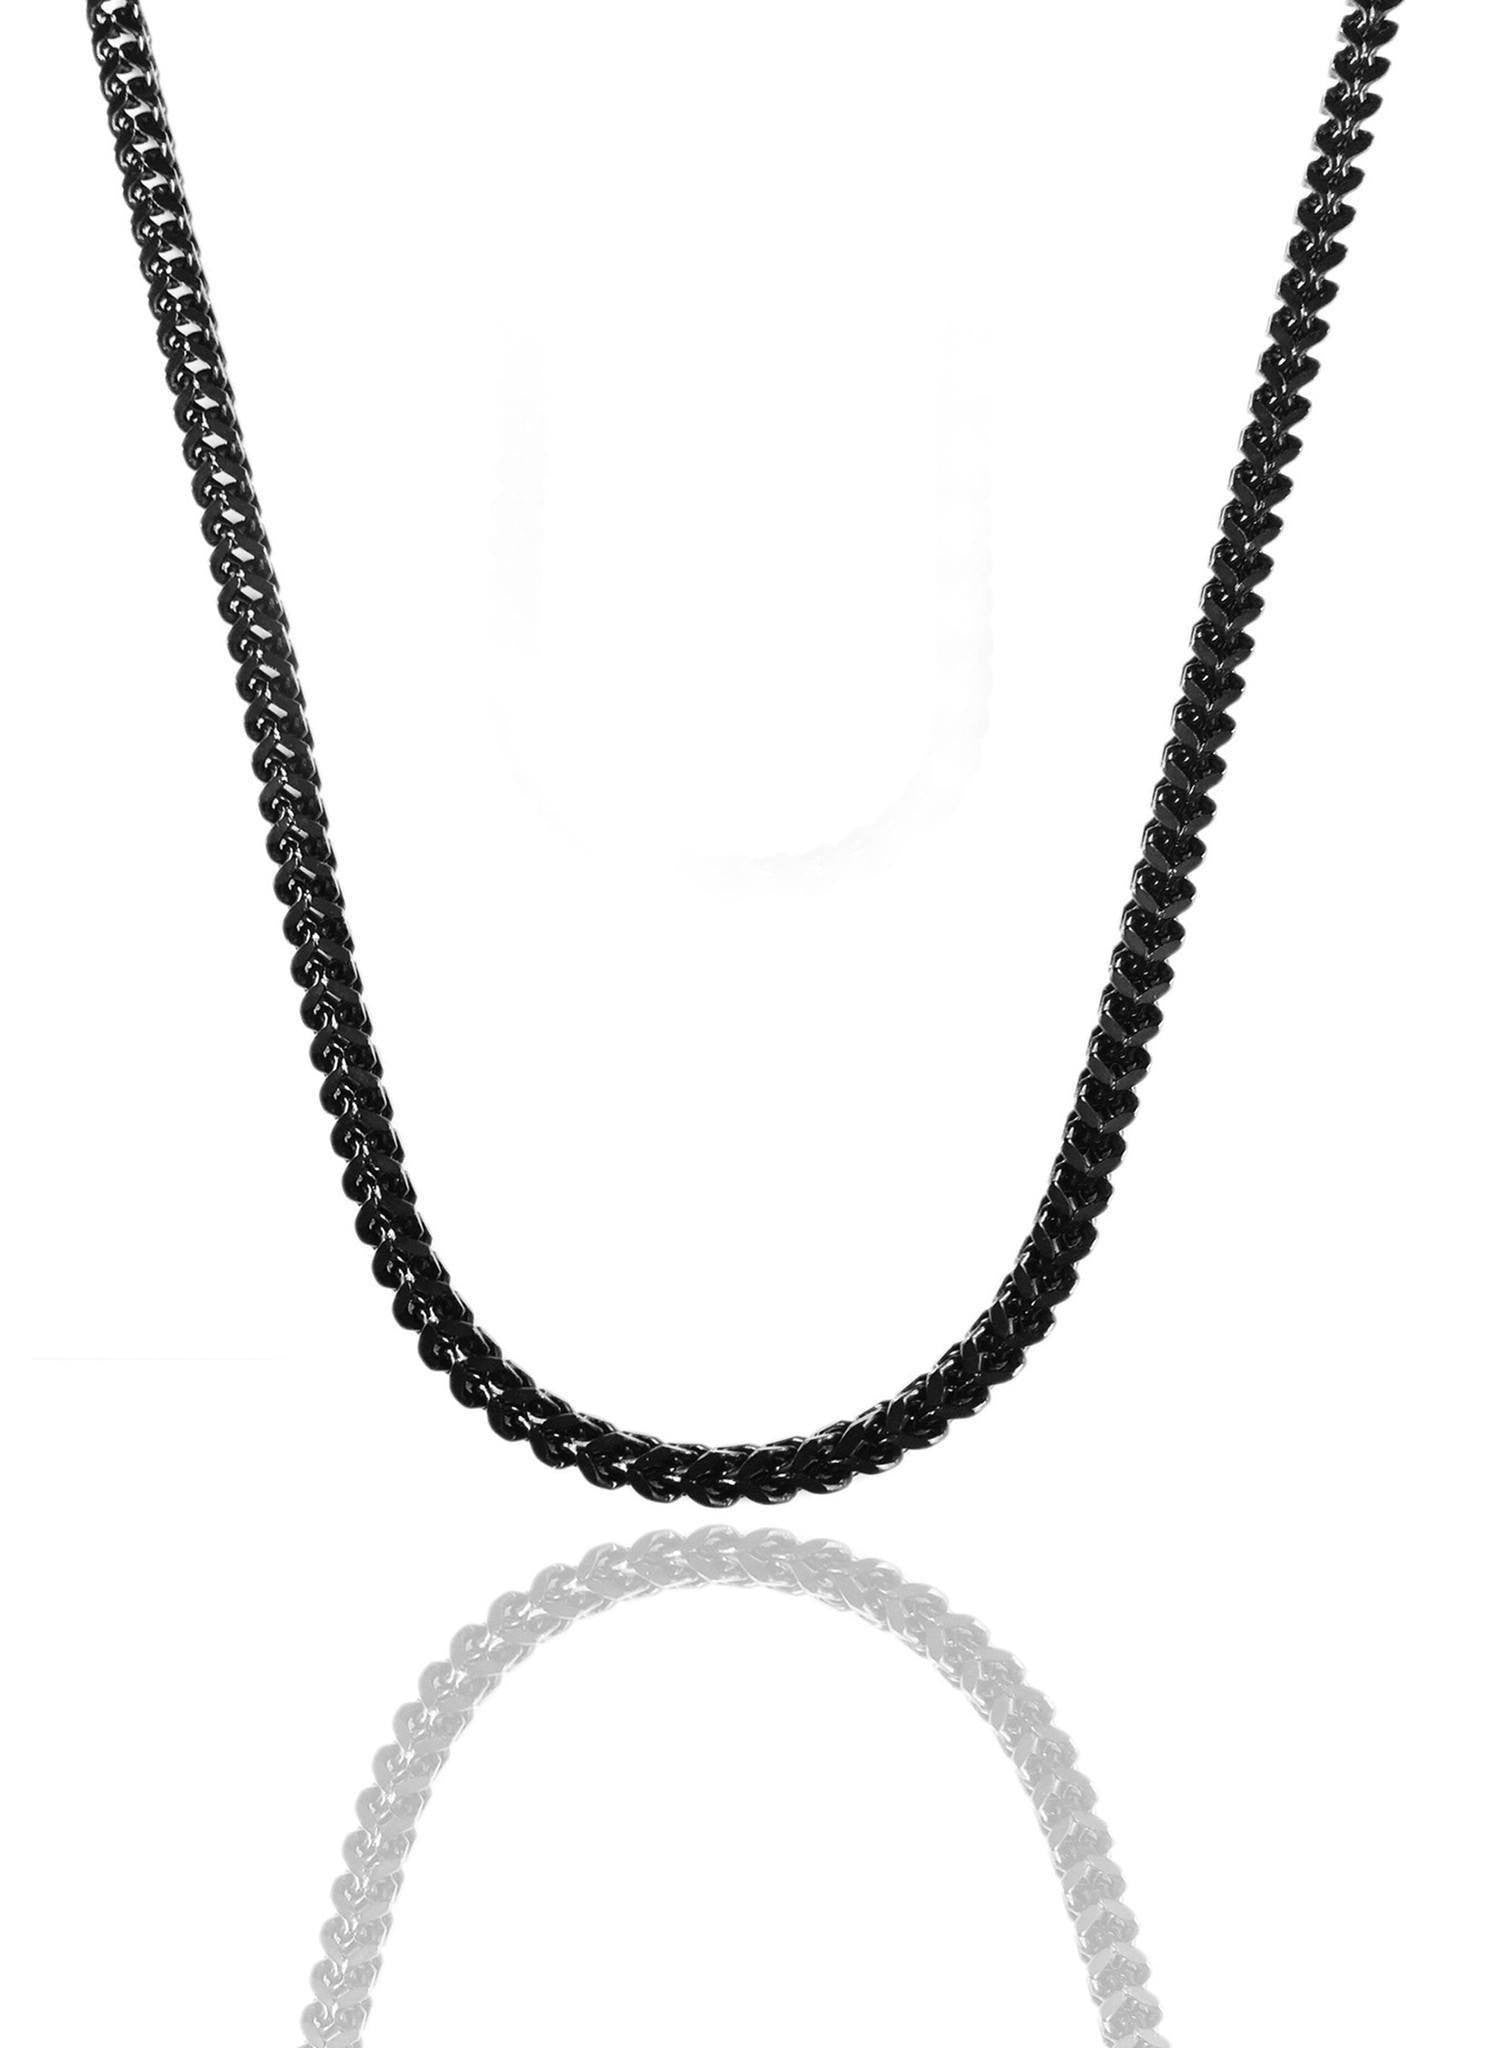 Necklace - The Magnus Chain X BLΛCK